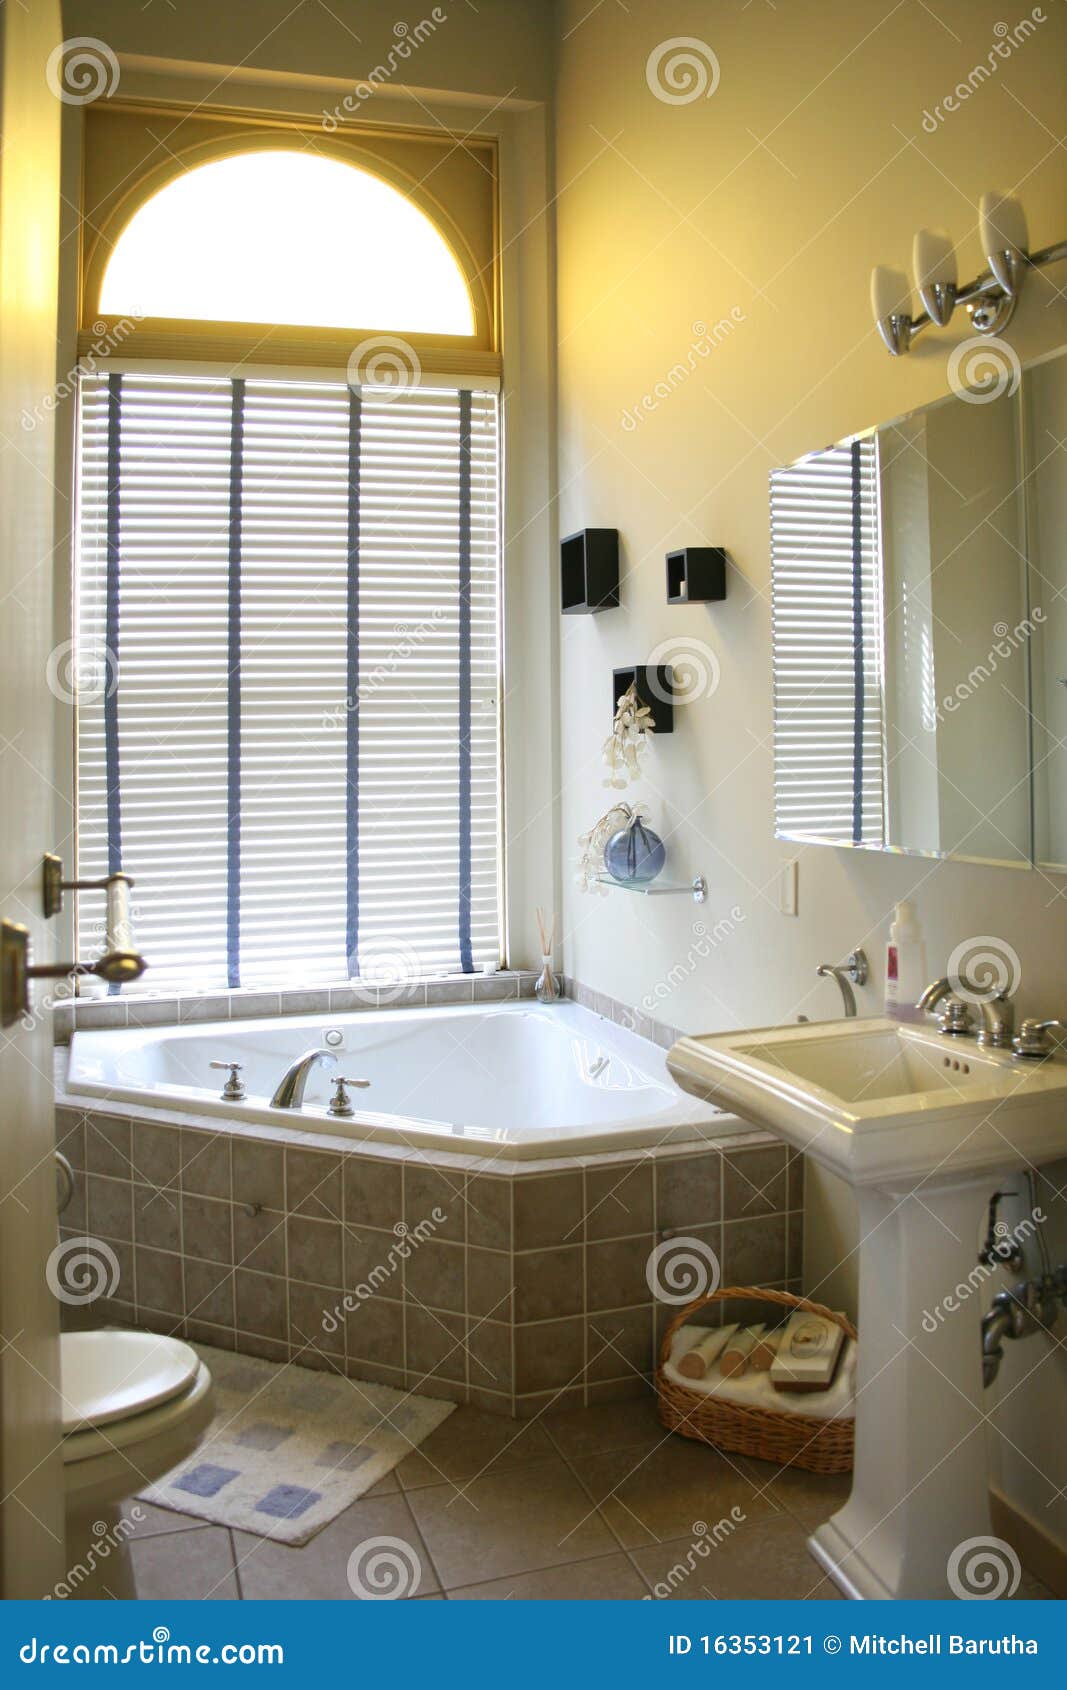 upscale bathroom with corner tub.